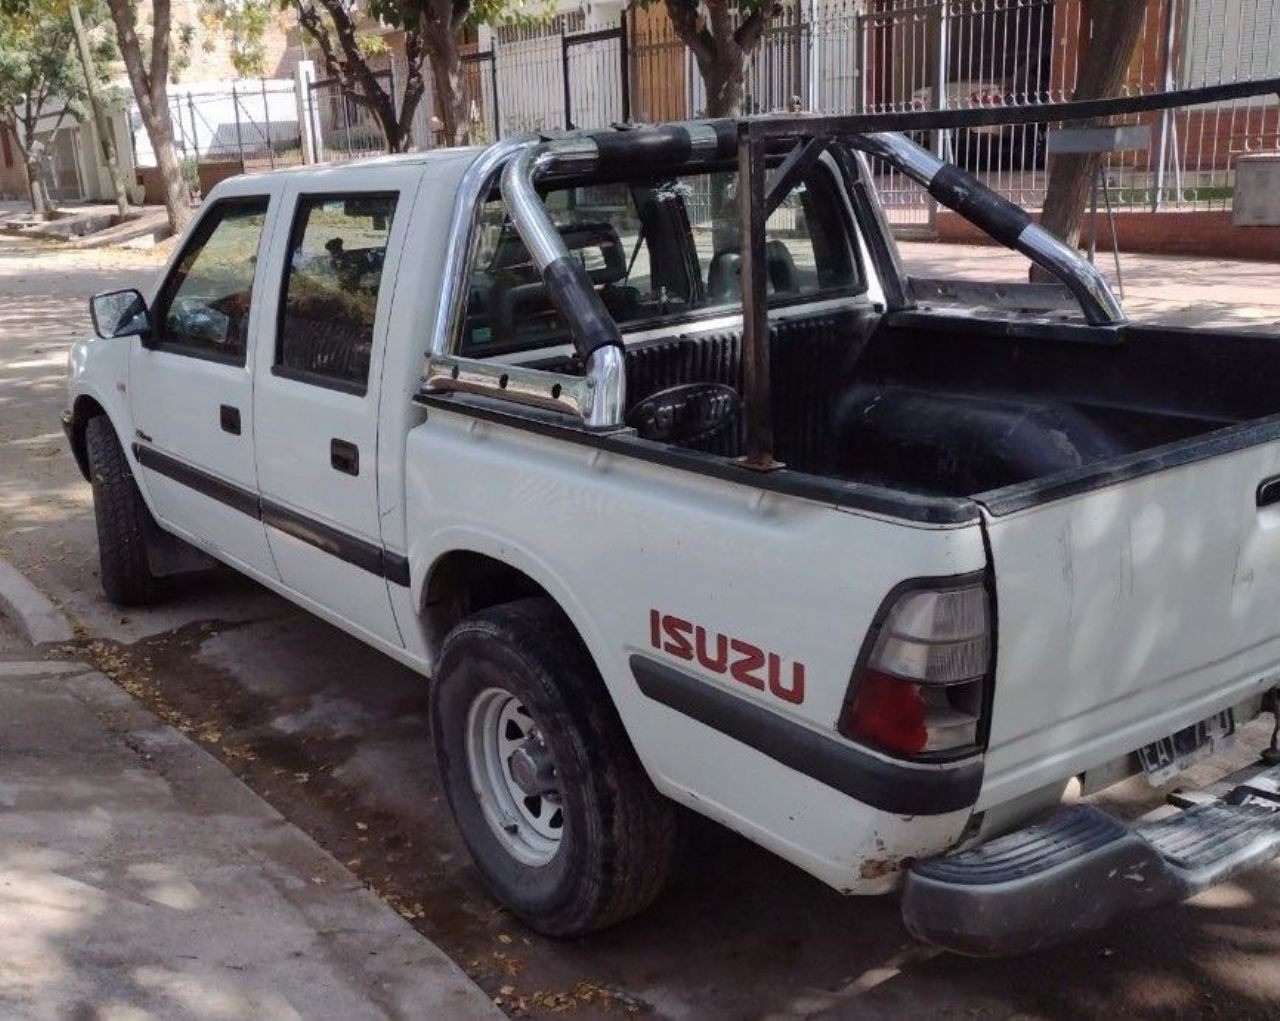 Isuzu Pick-Up Usada en Mendoza, deRuedas